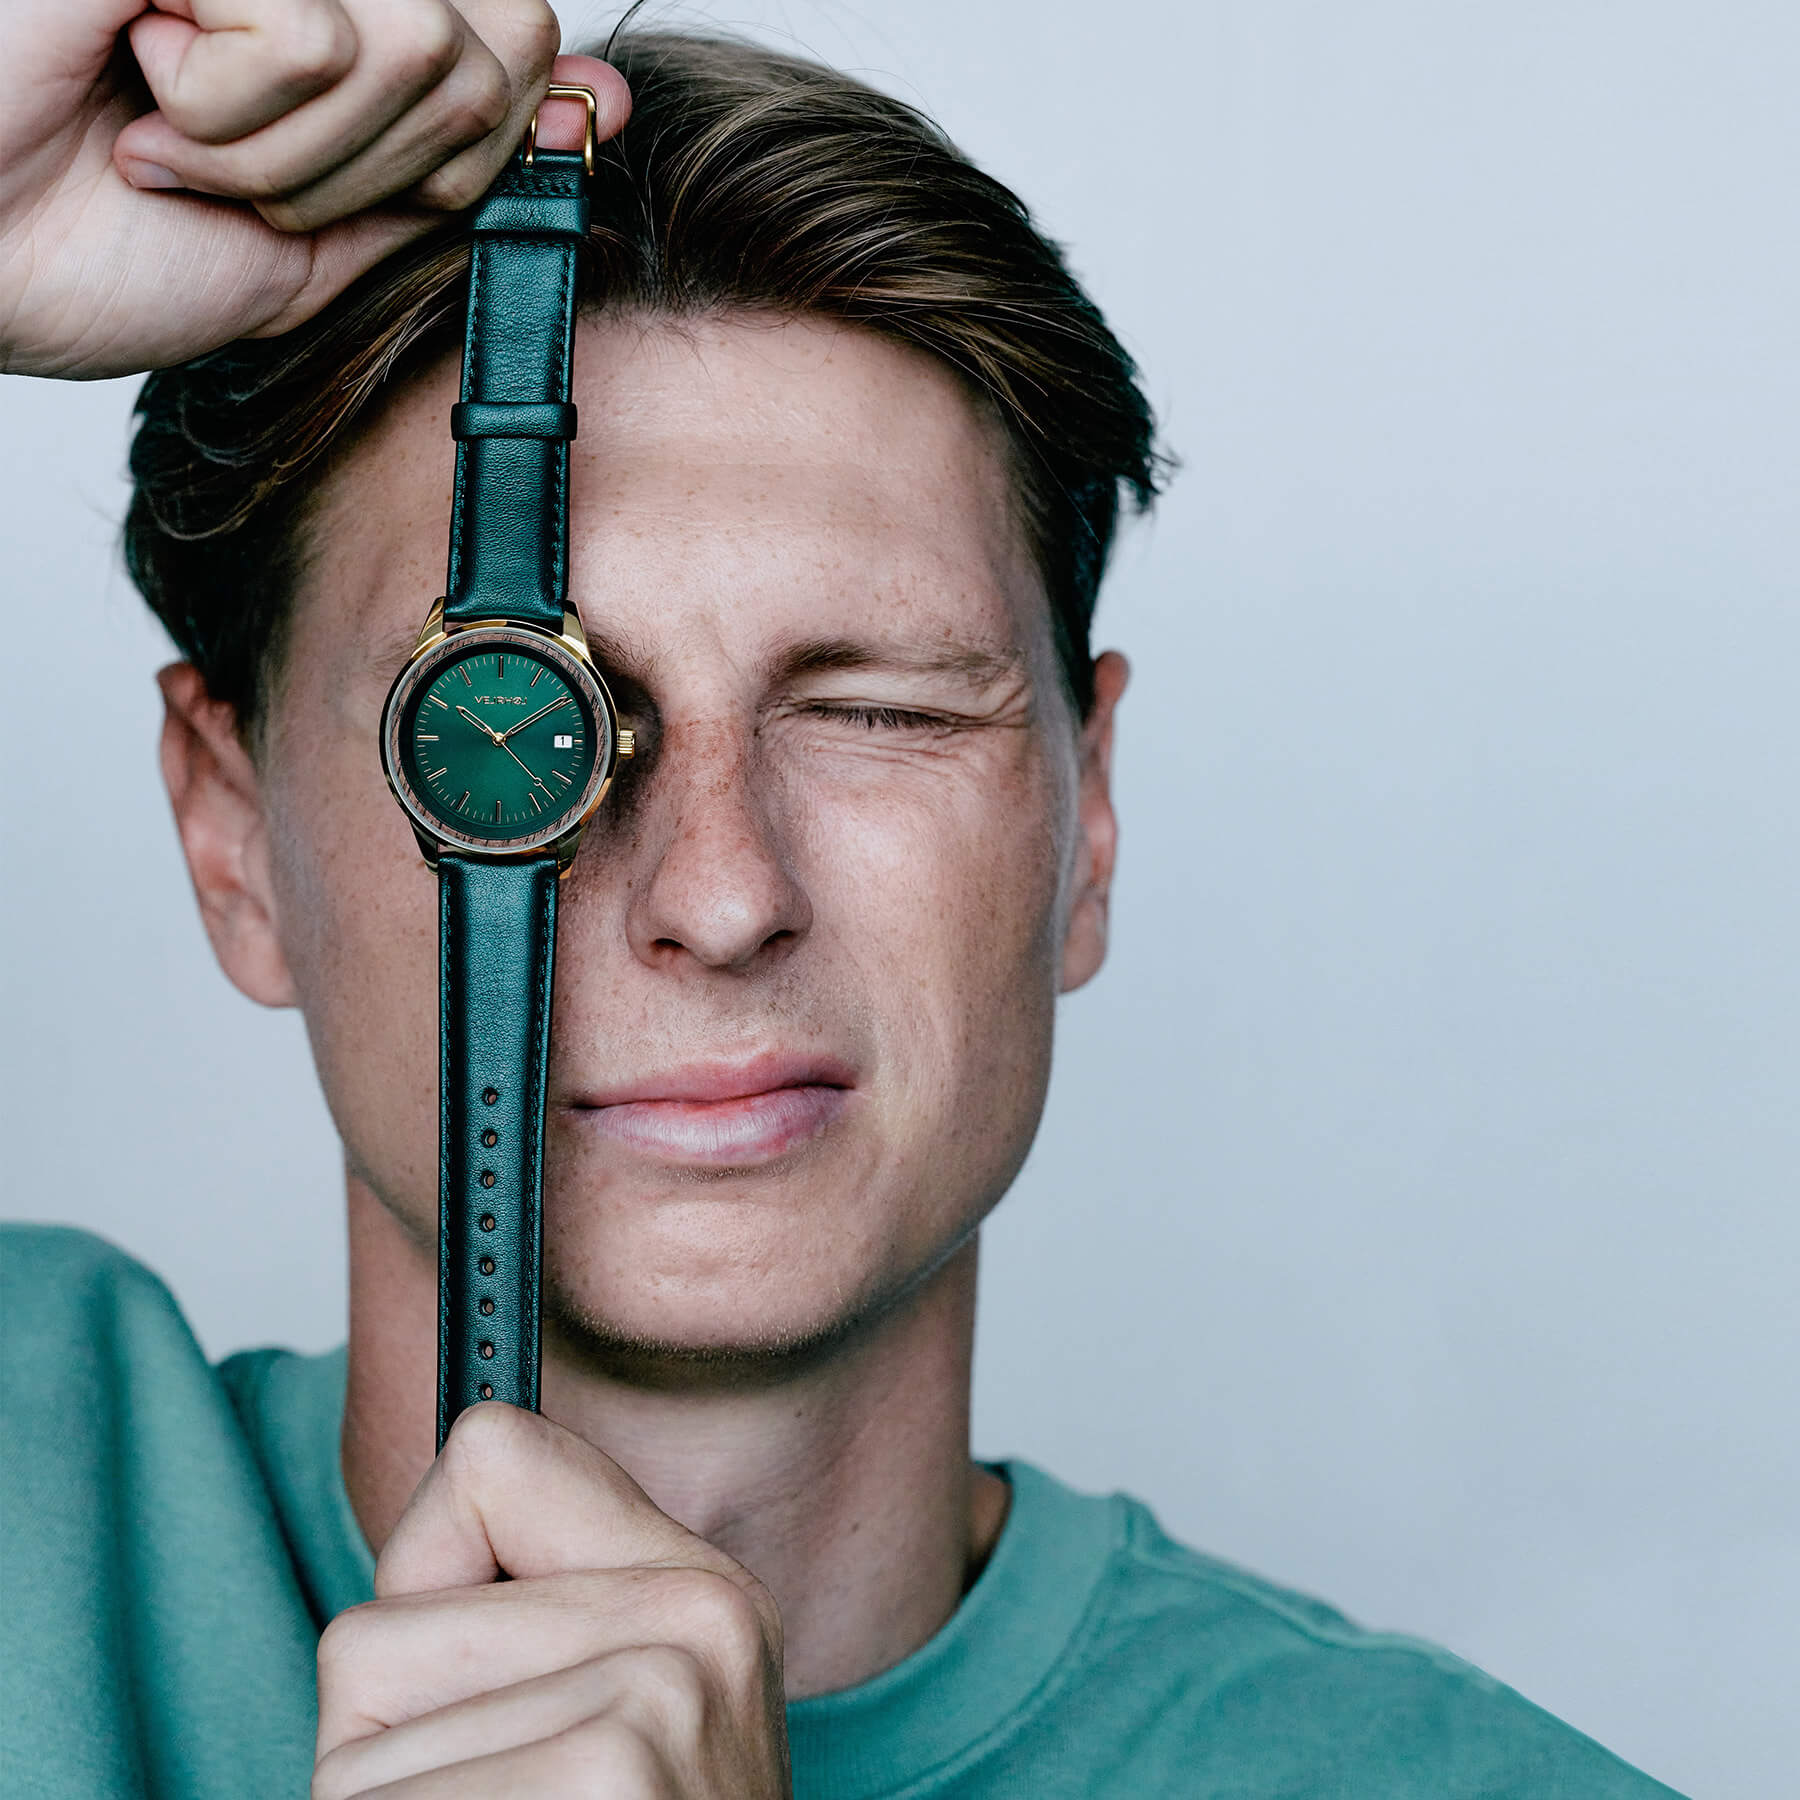 football player kasper junker with green automatic watch from vejrhøj